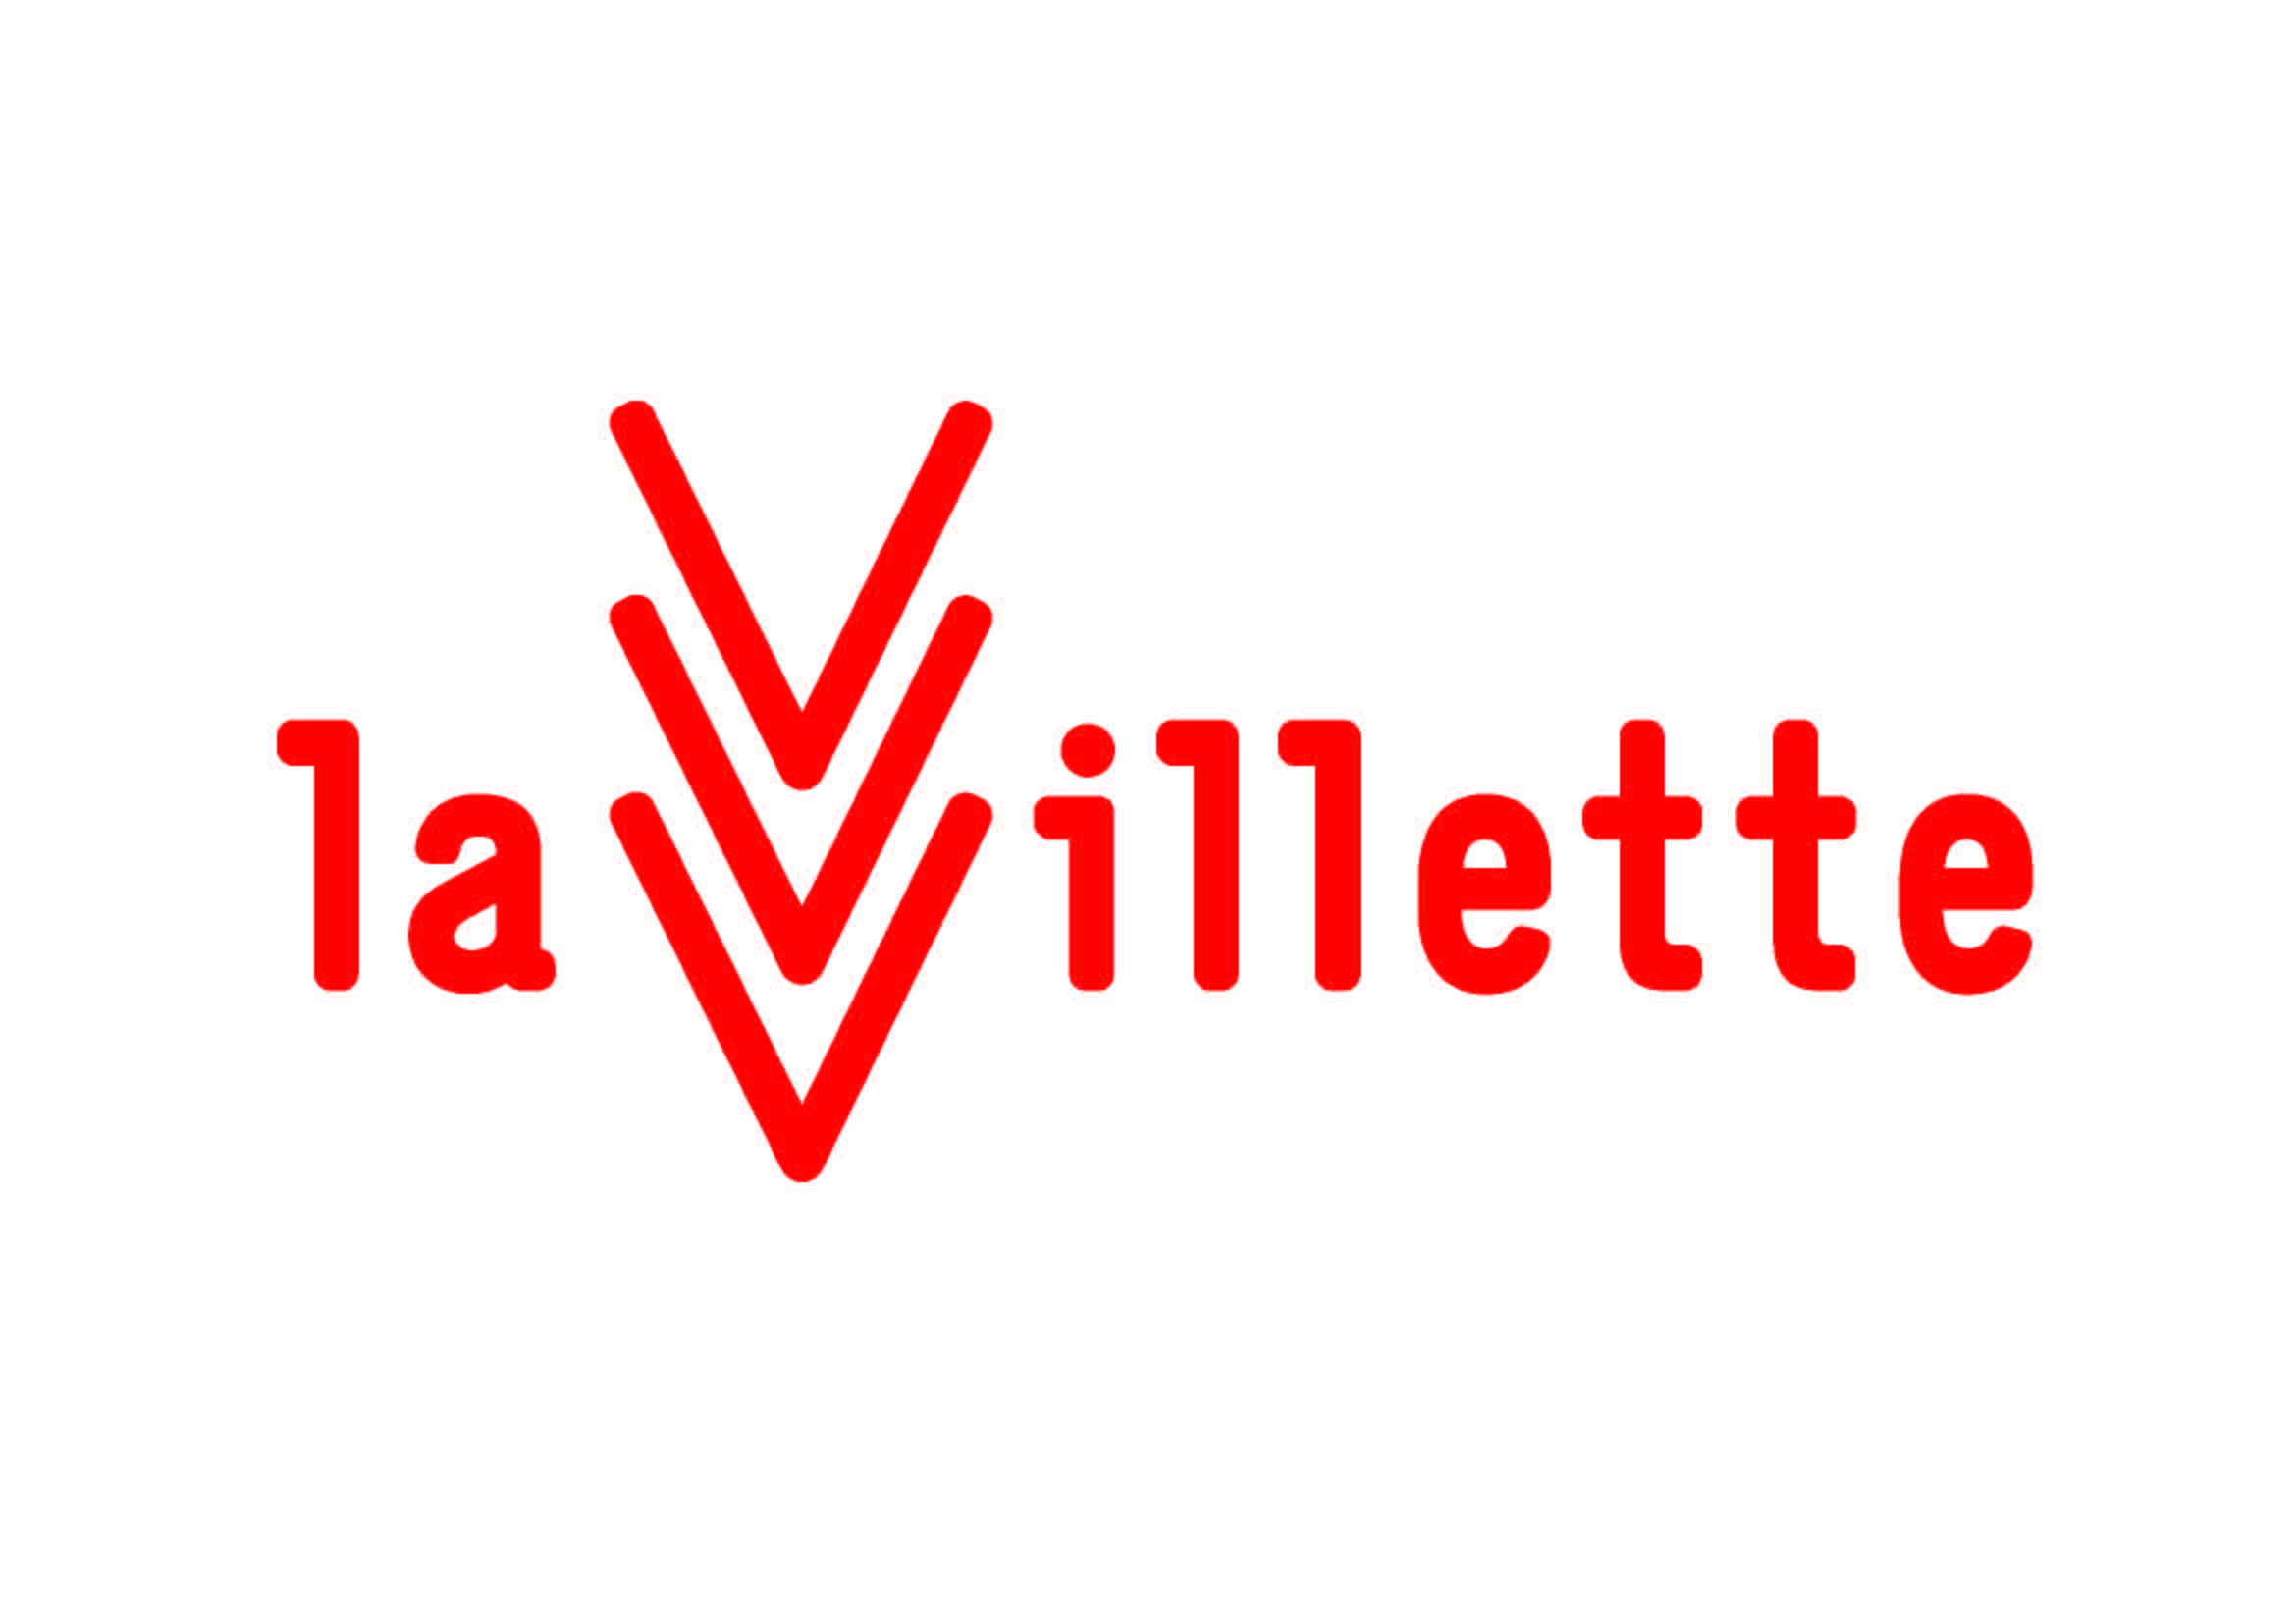 Logo Villette